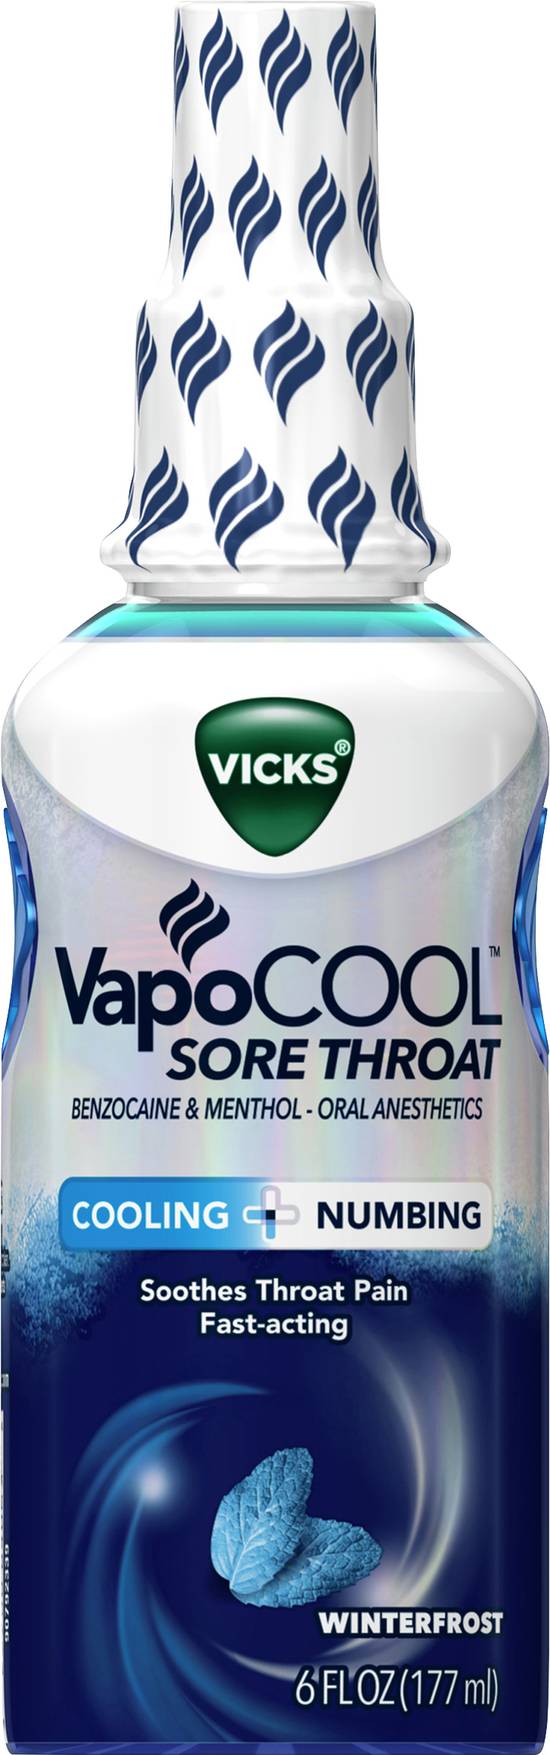 Vicks Vapocool Sore Throat Oral Anesthetic Winterfrost Flavor